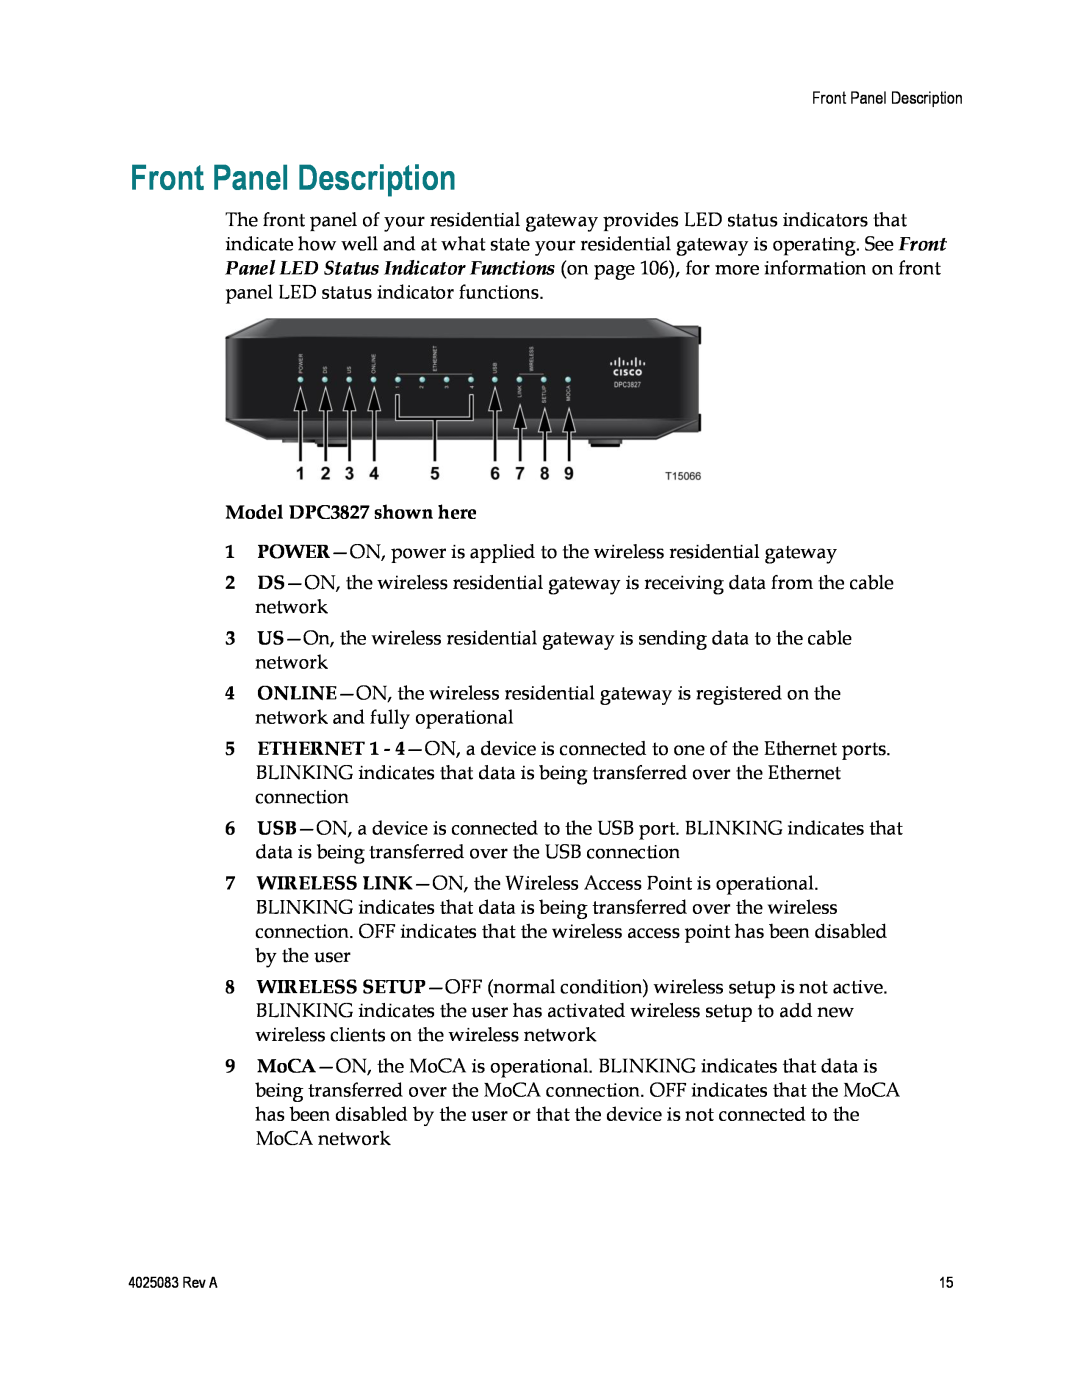 Cisco Systems EPC3827, 4039760 important safety instructions Front Panel Description, Model DPC3827 shown here 